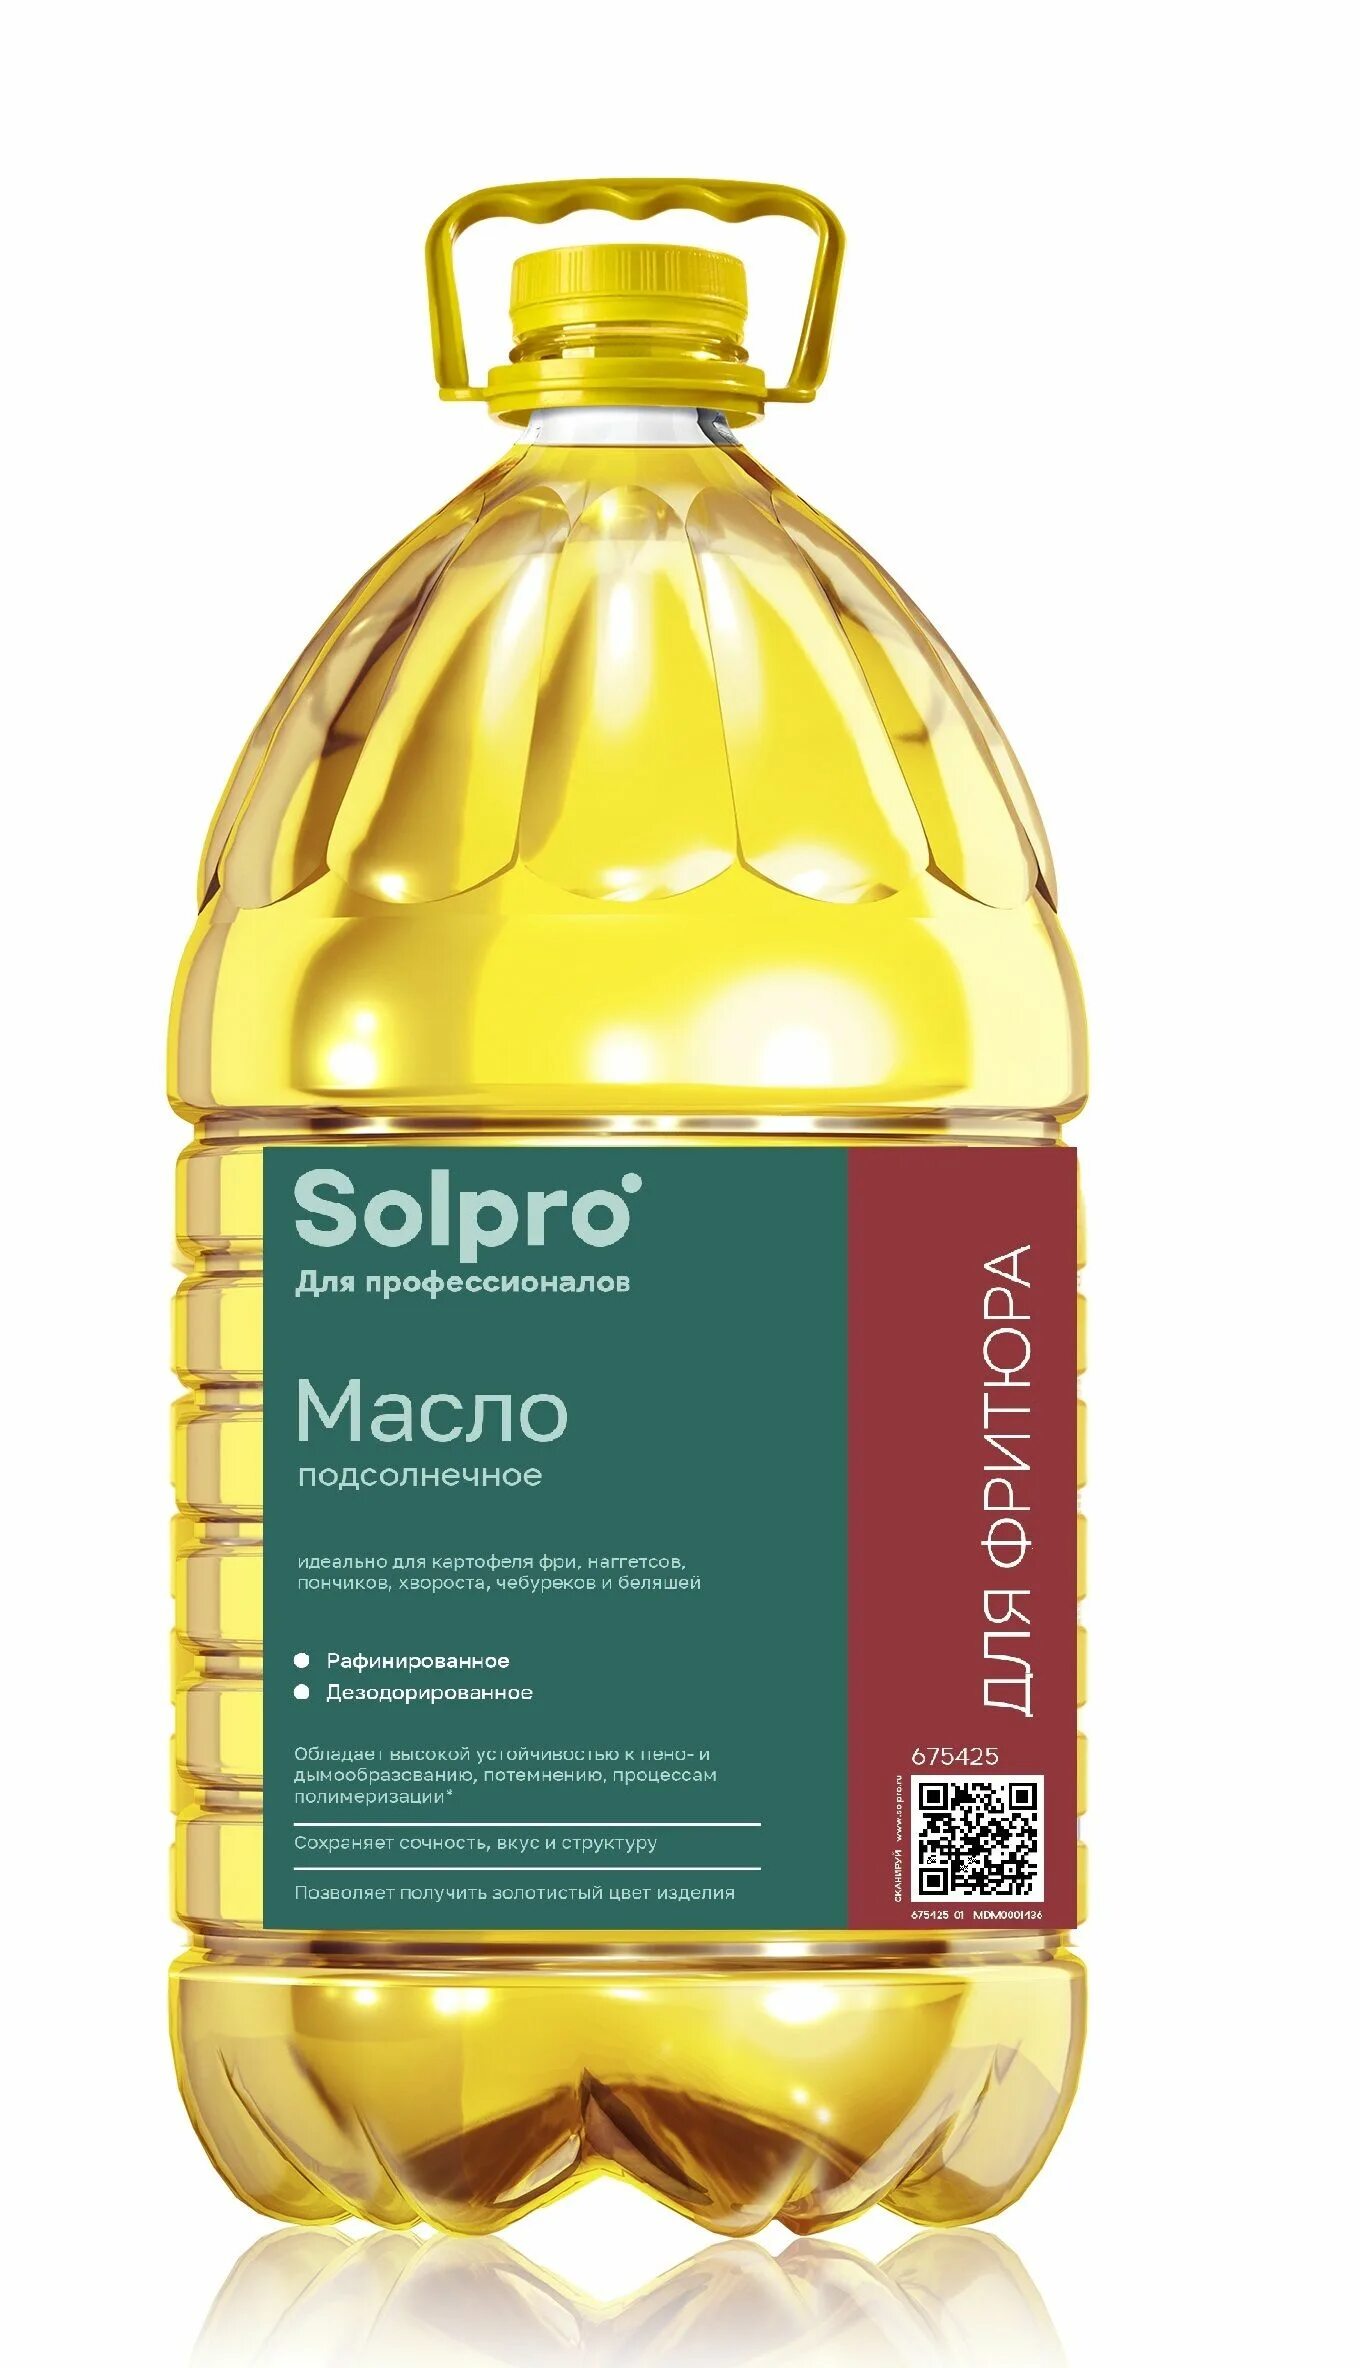 Масло подсолнечное "Solpro" 5л. Масло фритюрное 5л. Масло для фритюра СОЛПРО. Solpro масло 5 литров. Подсолнечное масло для фритюра